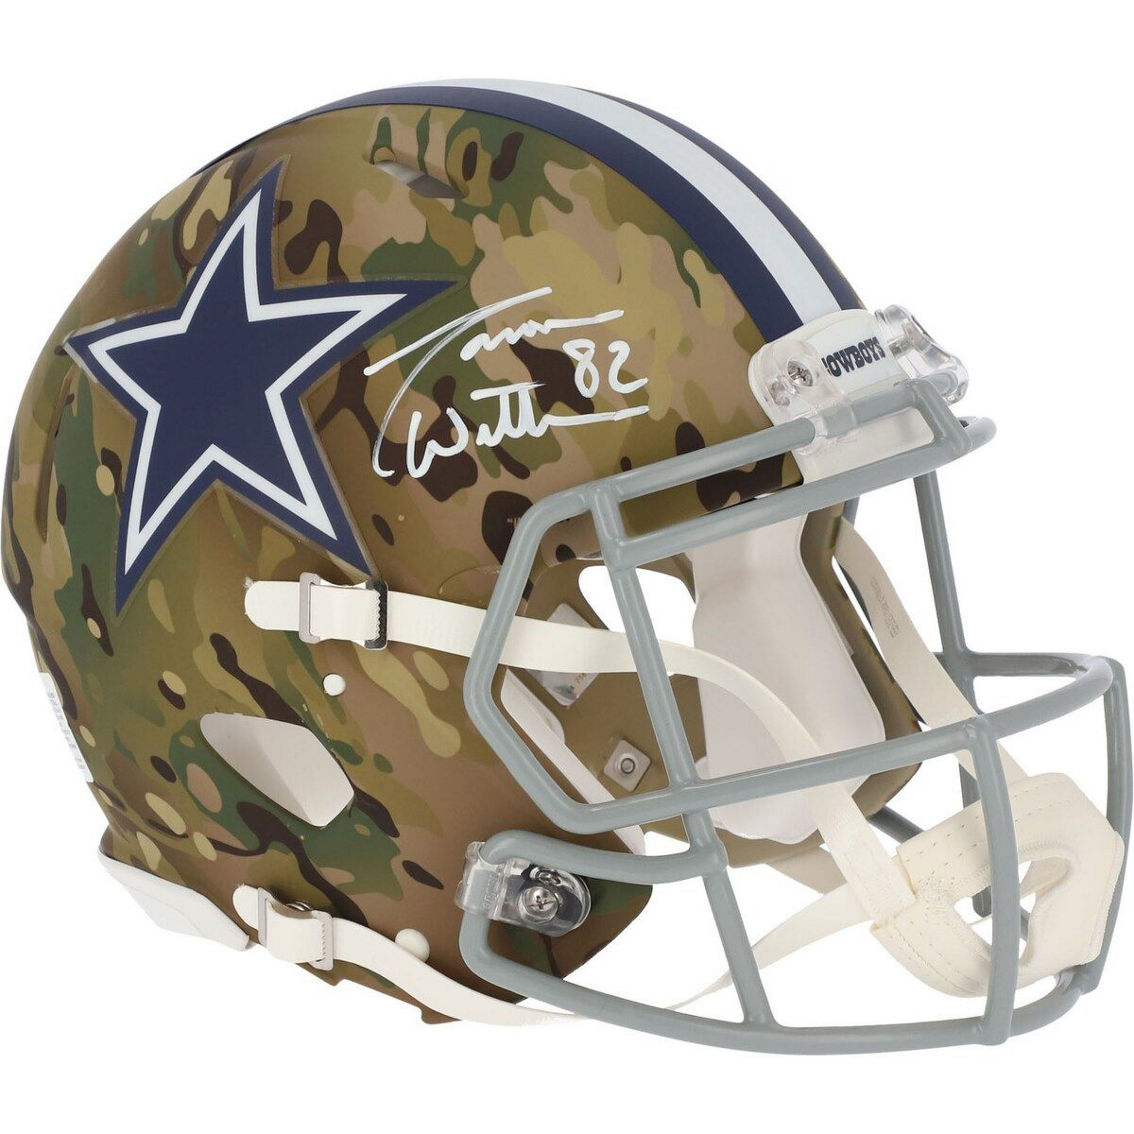 Fanatics Authentic Jason Witten Dallas Cowboys Autographed Riddell Camo Alternate Speed Authentic Helmet - Image 3 of 4